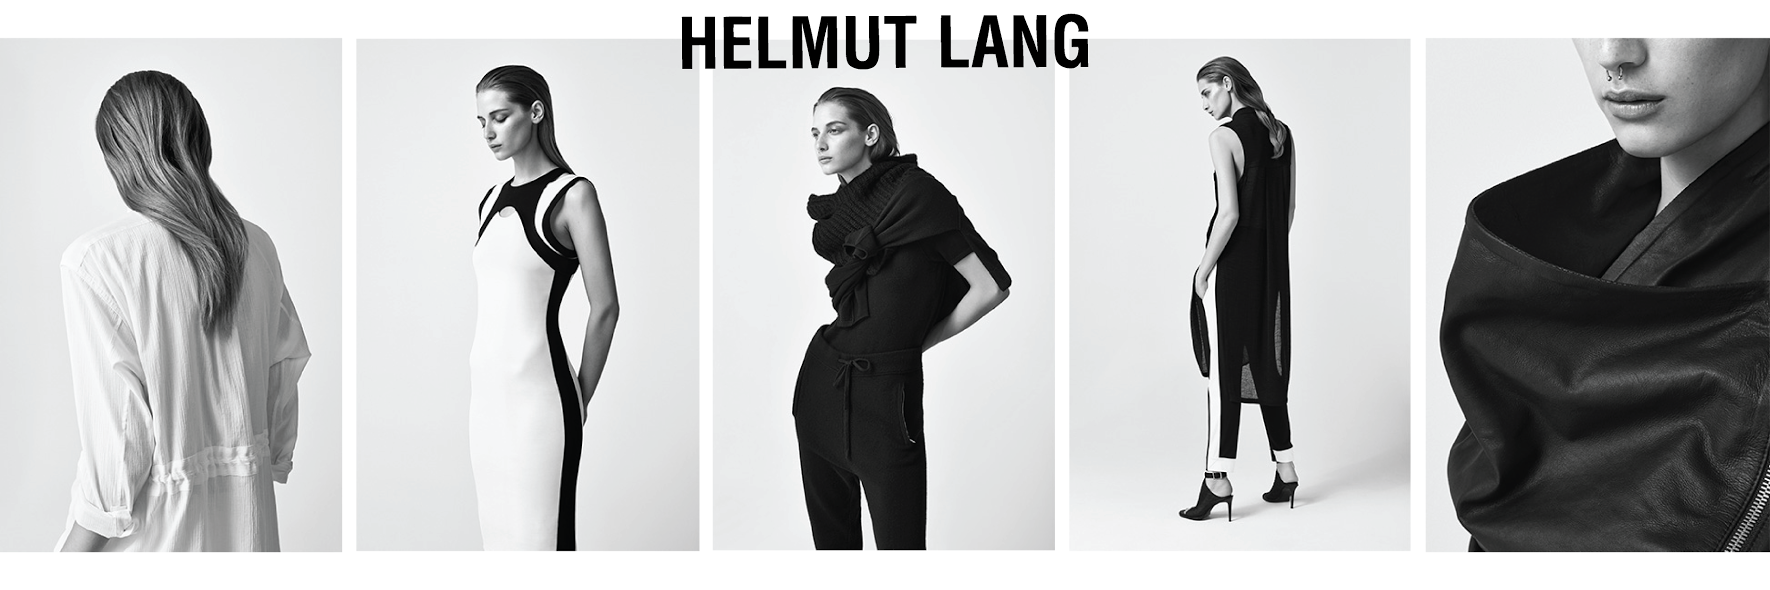 Helmut Lang  Fashion Designer Biography